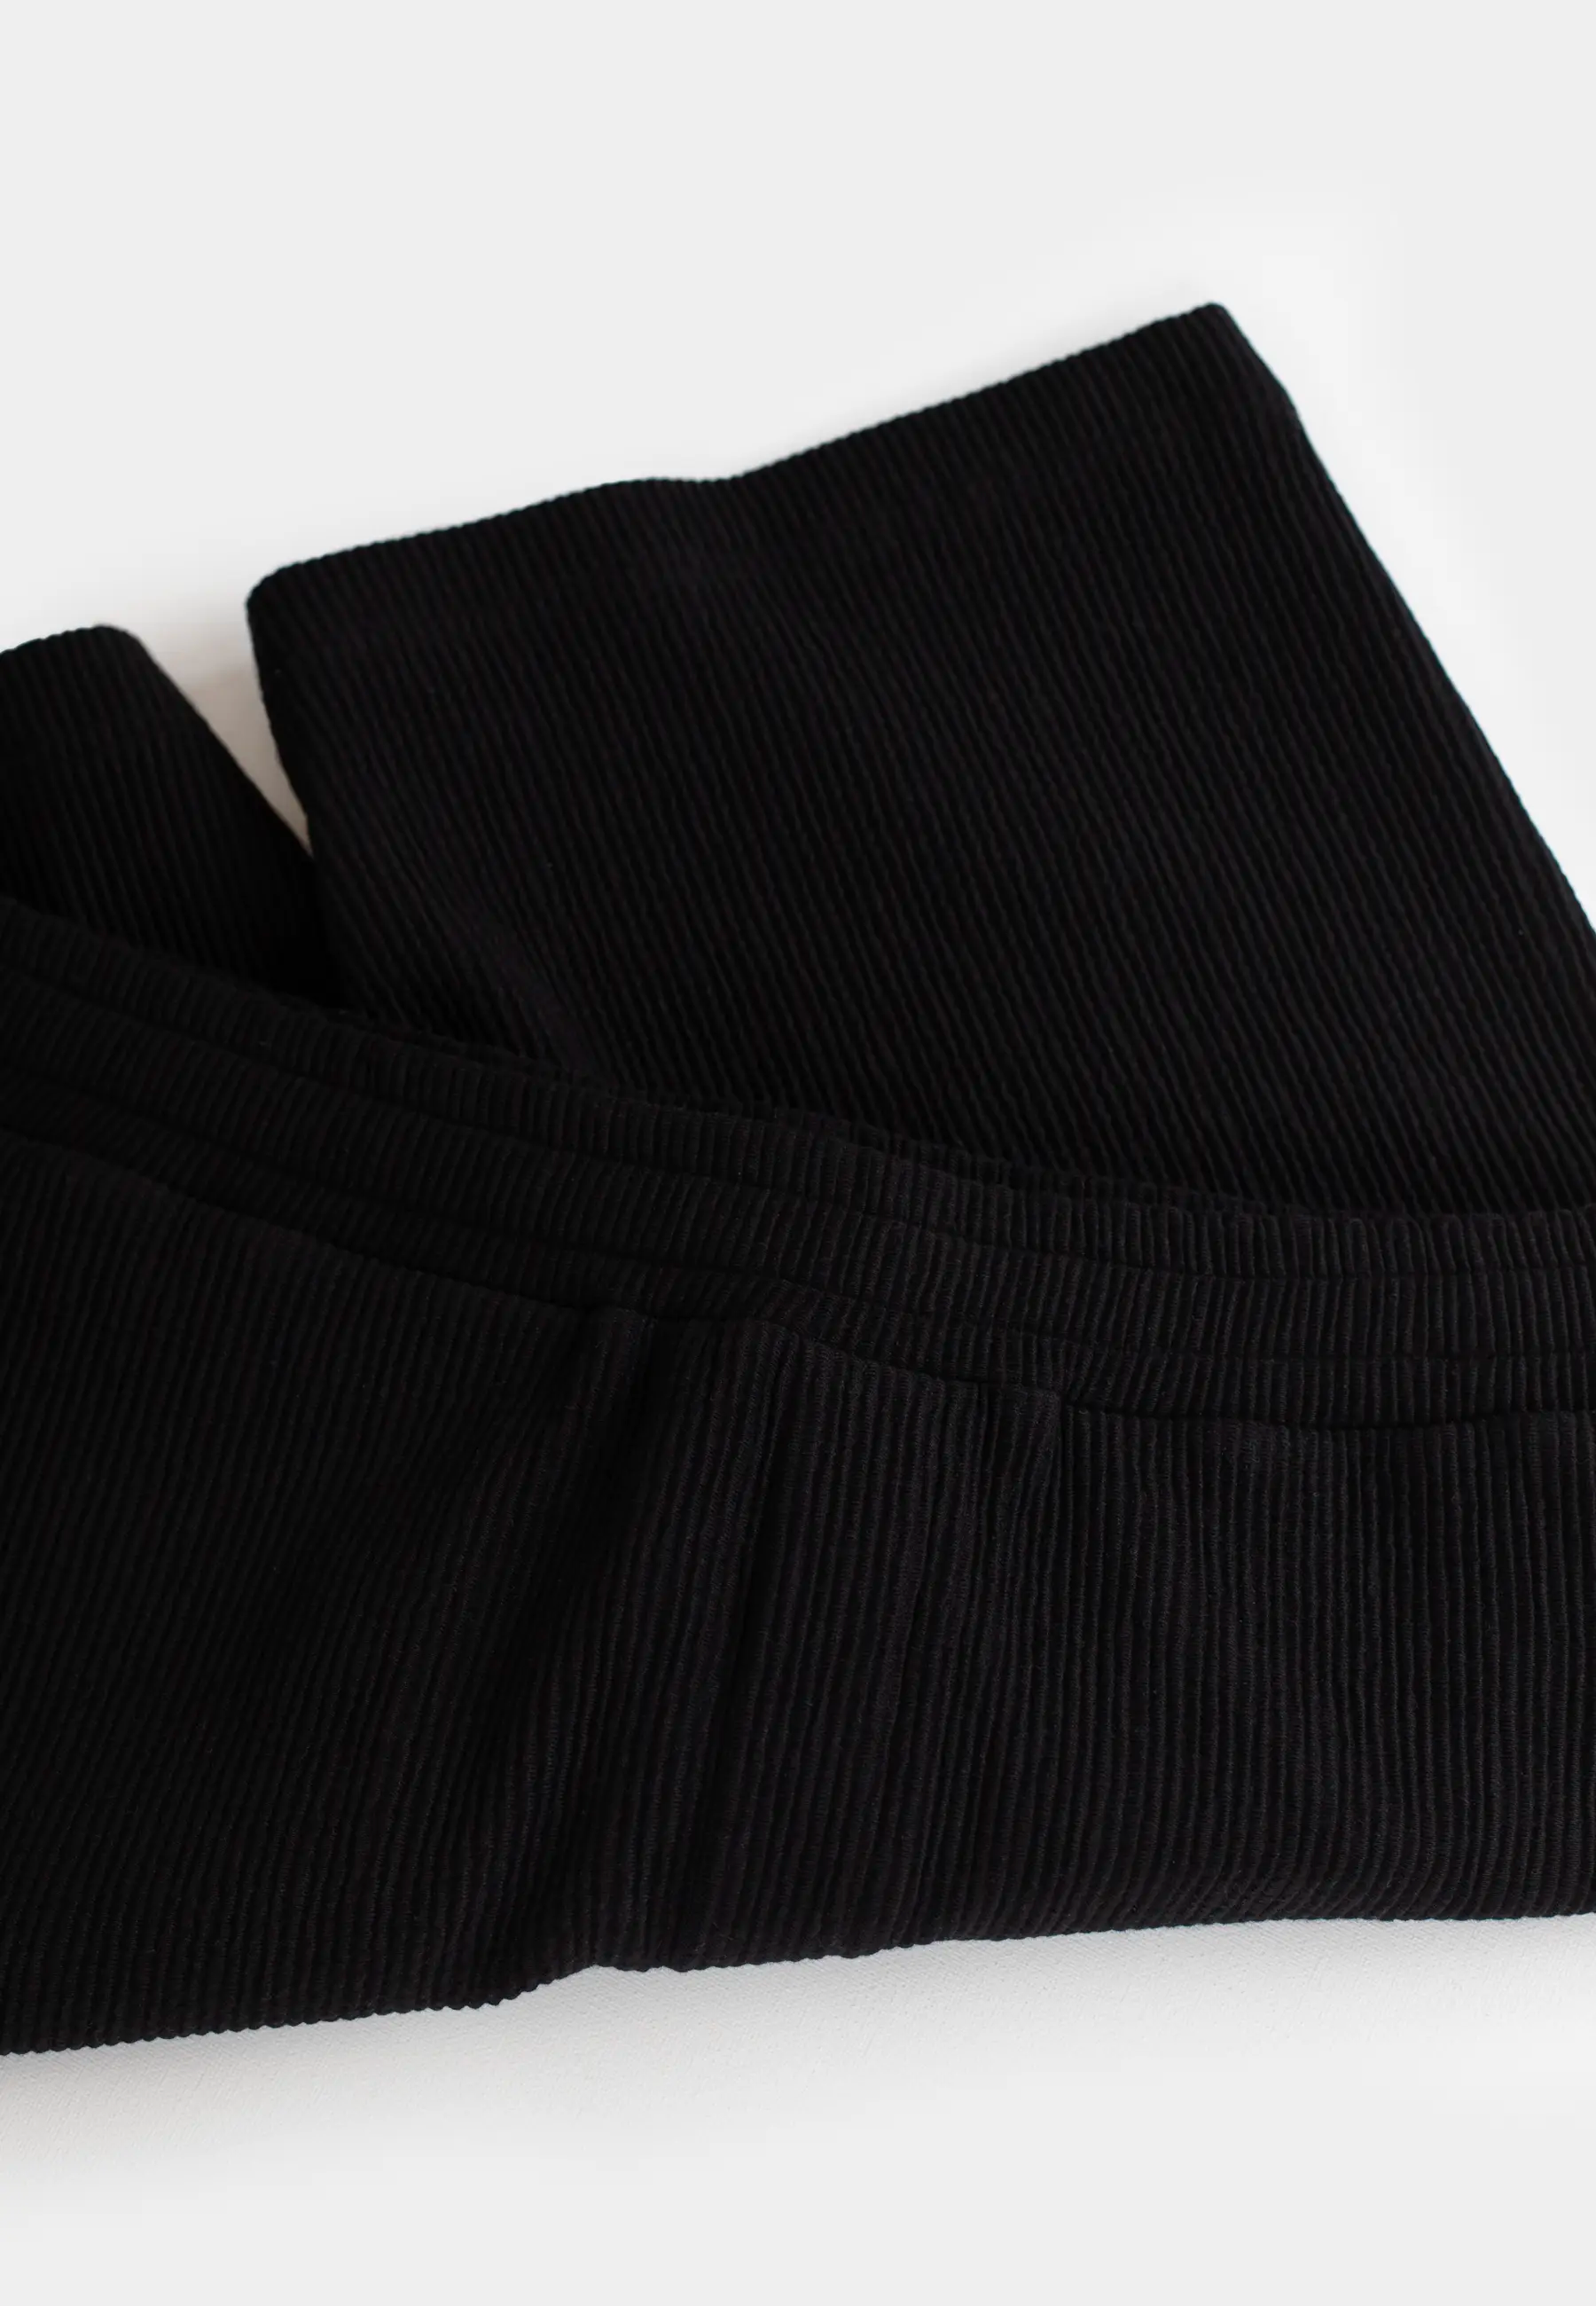 Mian plisse shorts - Black